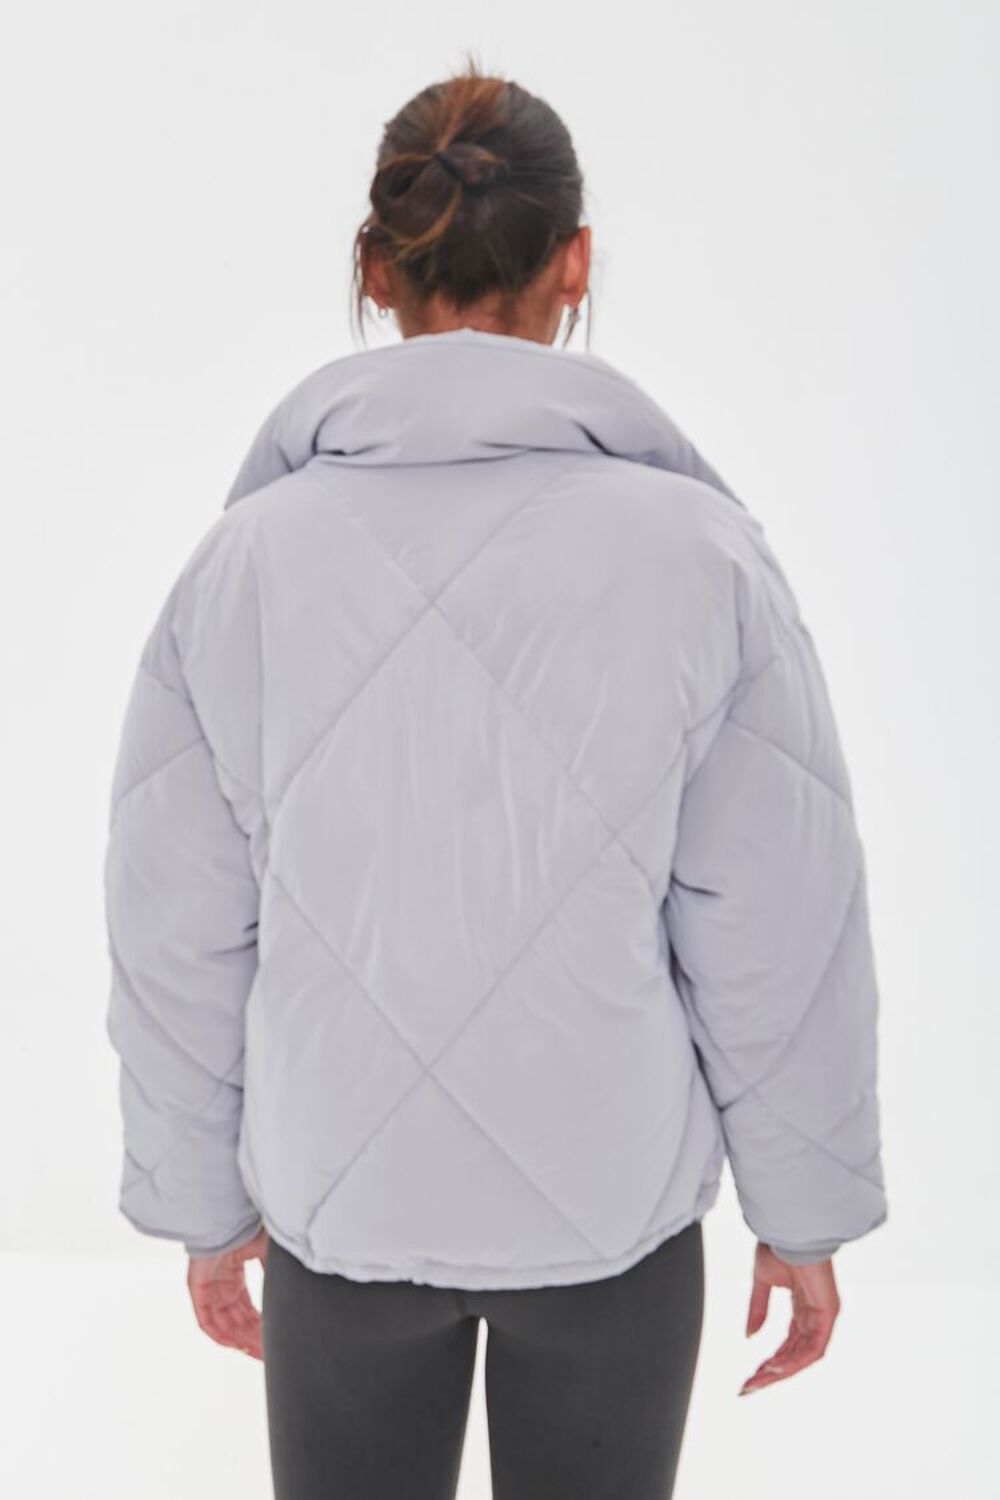 GREY Zip-Up Puffer Jacket, image 3